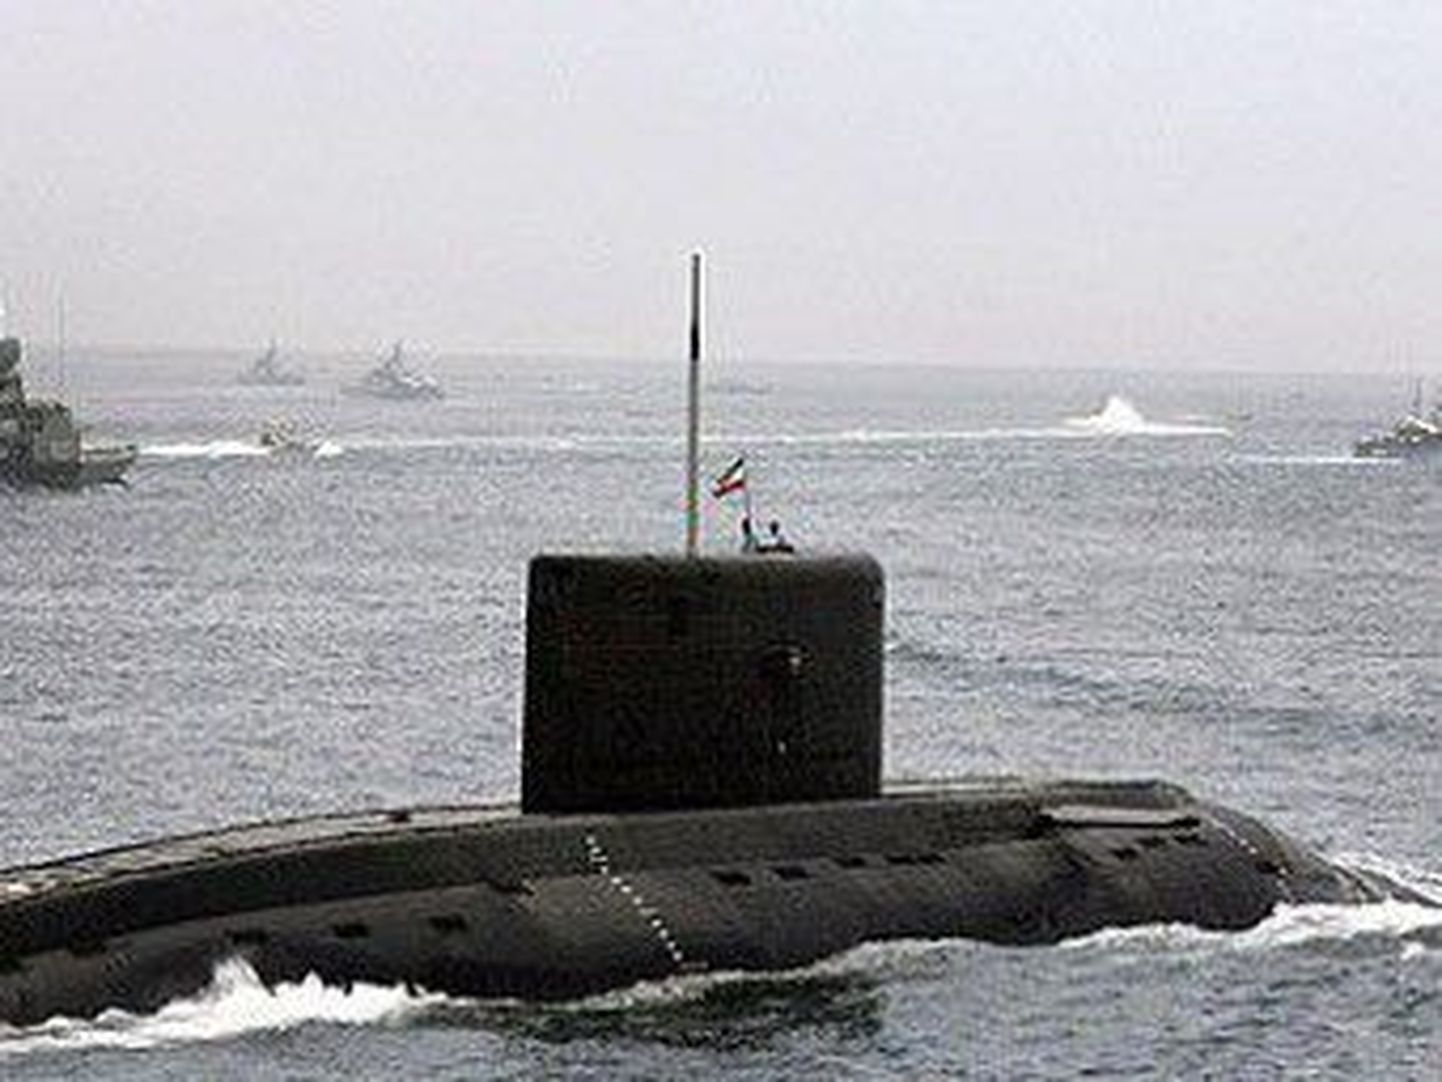 Подлодка типа "Тарег" ВМС Ирана, снимок иллюстративный